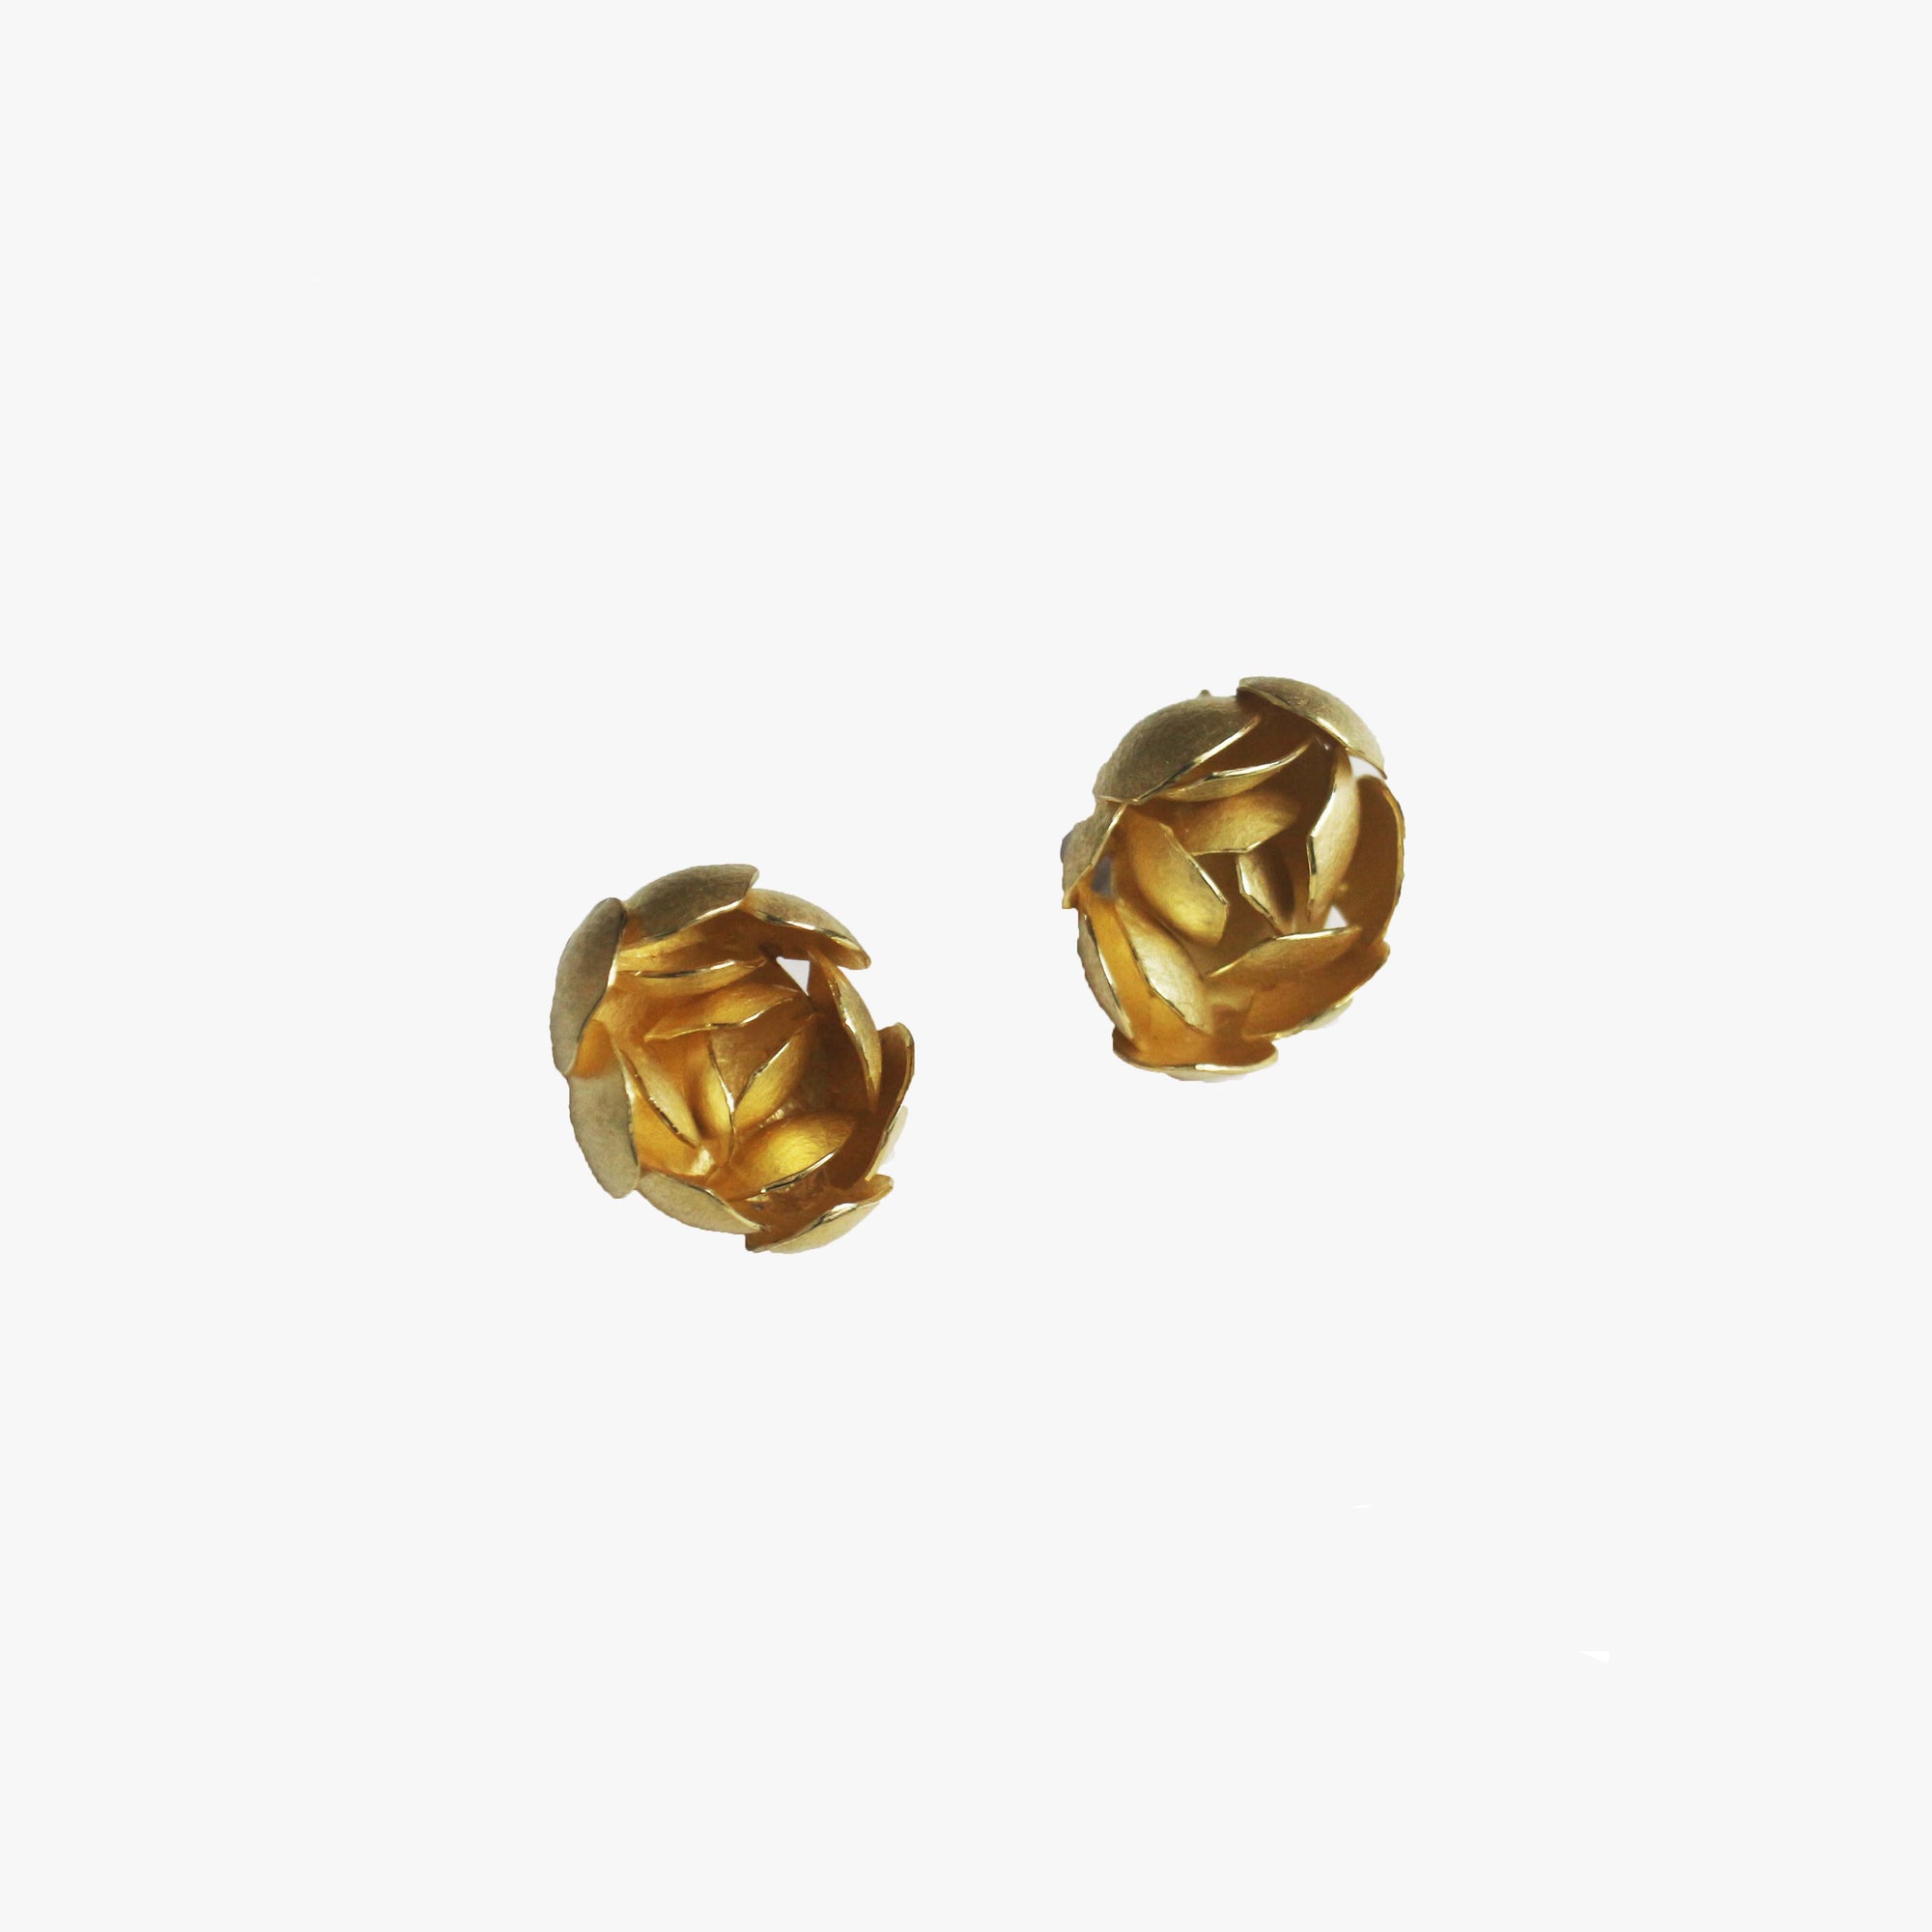 Cluster earrings